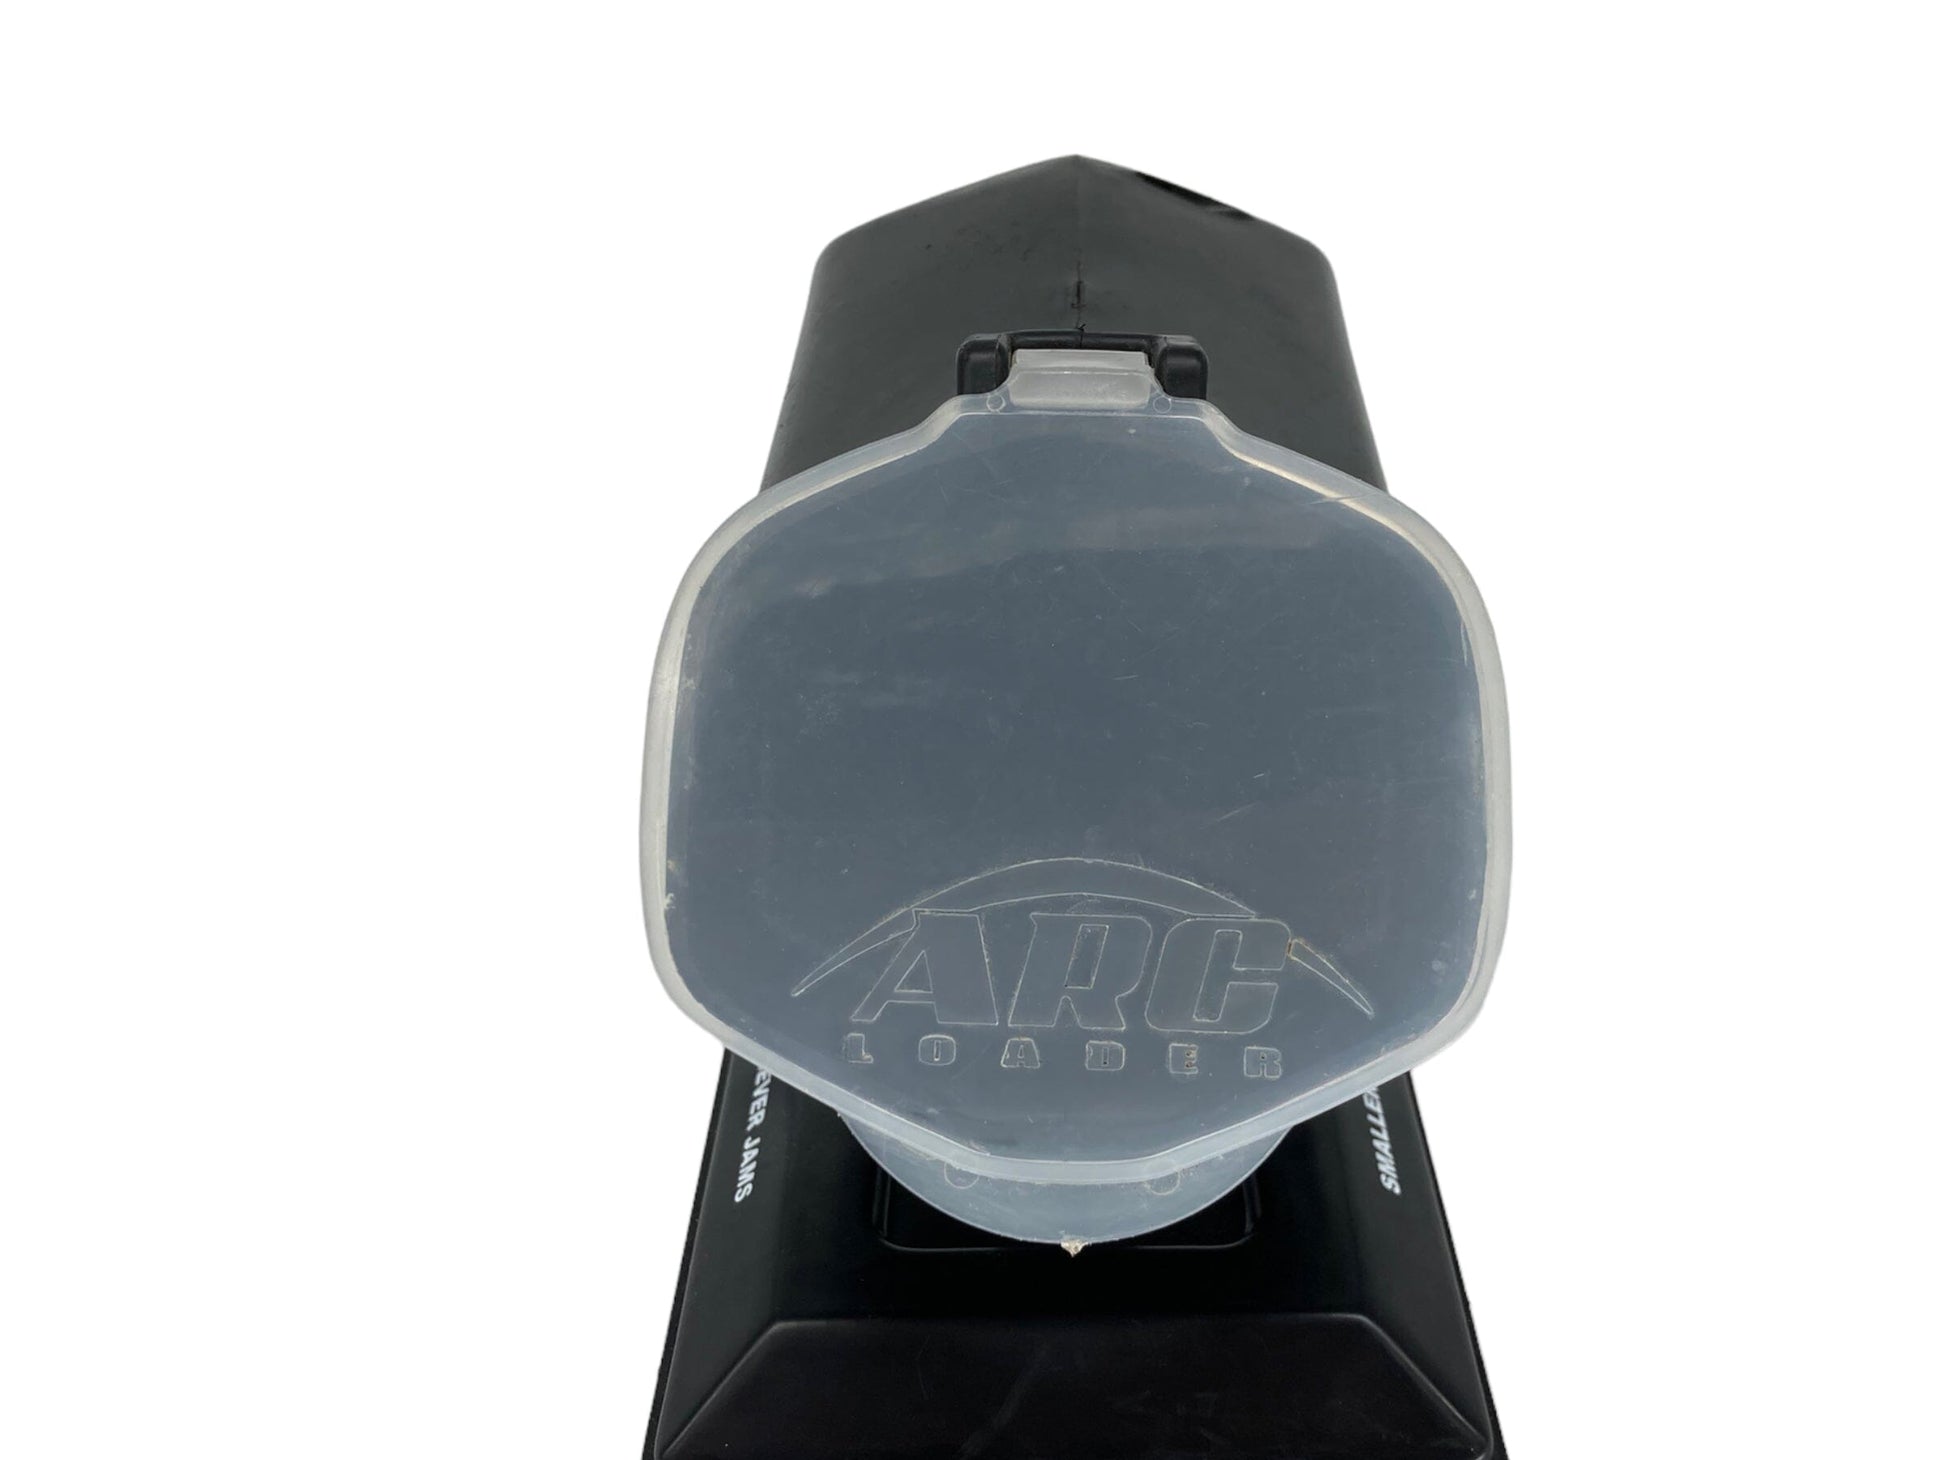 Used Tacamo Gravity Hopper Paintball Gun from CPXBrosPaintball Buy/Sell/Trade Paintball Markers, Paintball Hoppers, Paintball Masks, and Hormesis Headbands